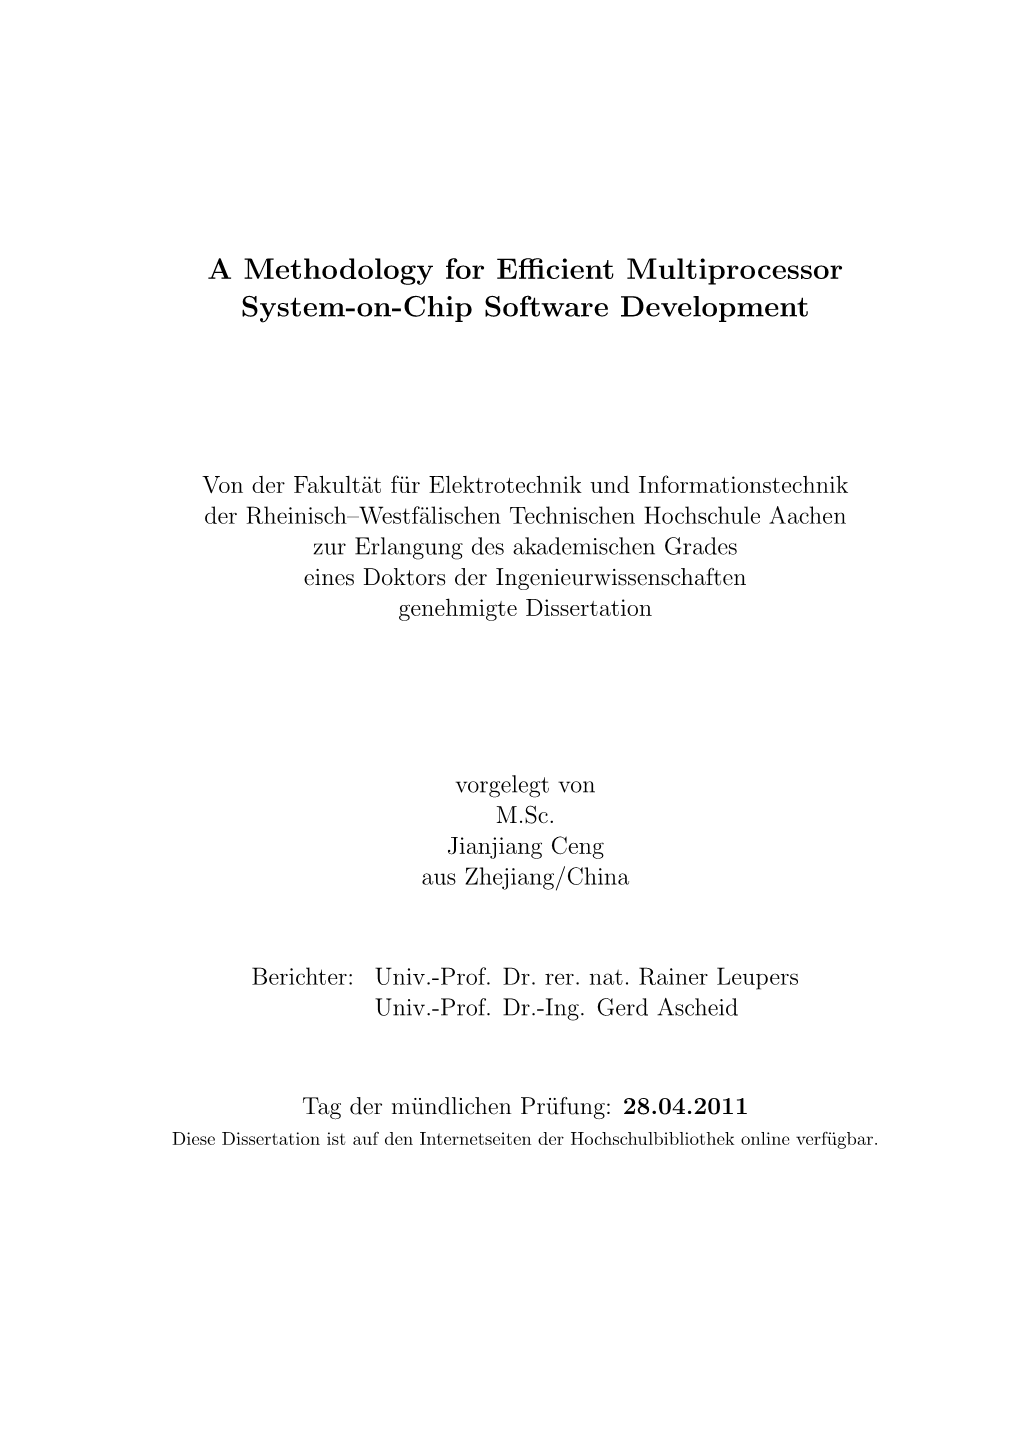 A Methodology for Efficient Multiprocessor System-On